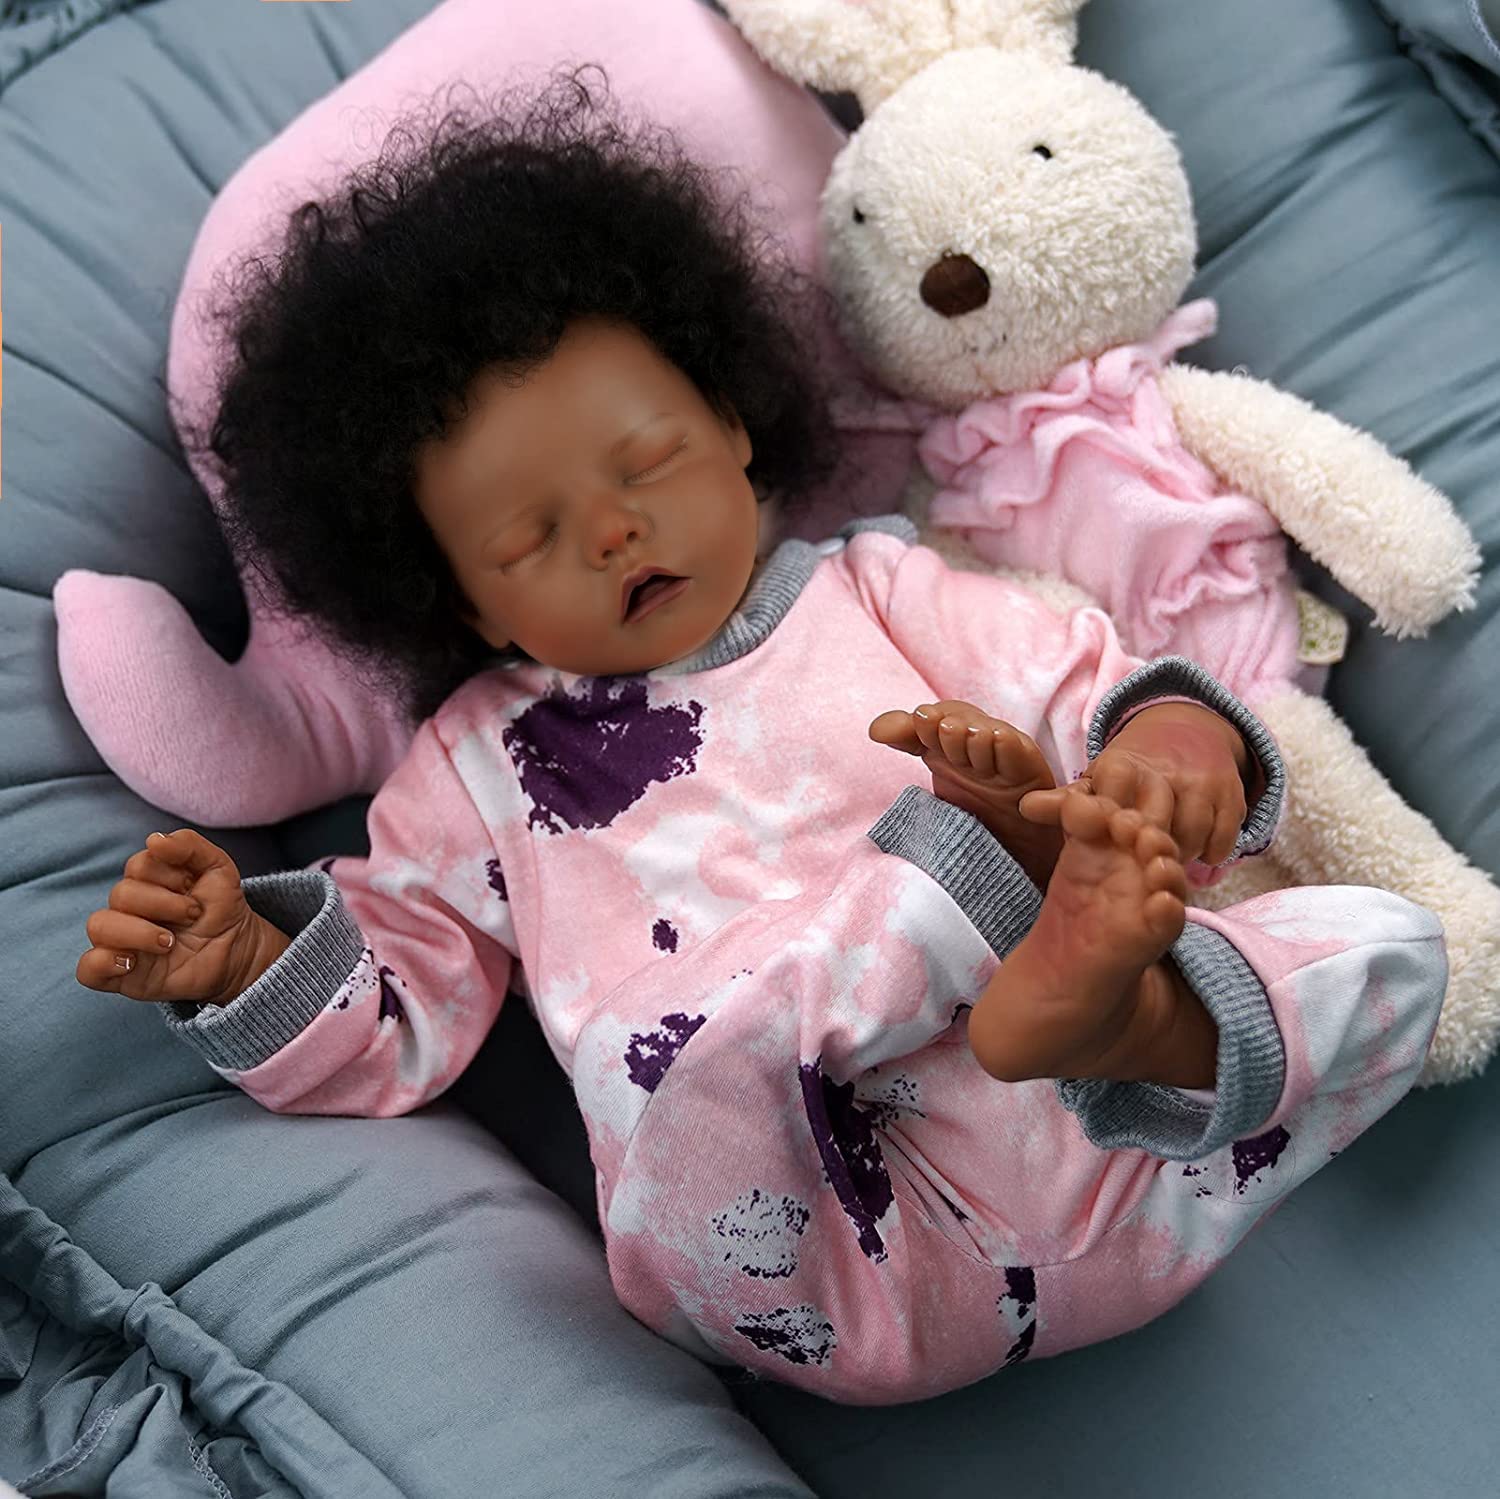 BABESIDE Lifelike Reborn Baby Dolls Black - 17-Inch Baby-Soft Body & Curls Realistic-Newborn Baby Dolls African American Real Life Baby Dolls Cloth Body w/Feeding Kit & Gift Box for Kids